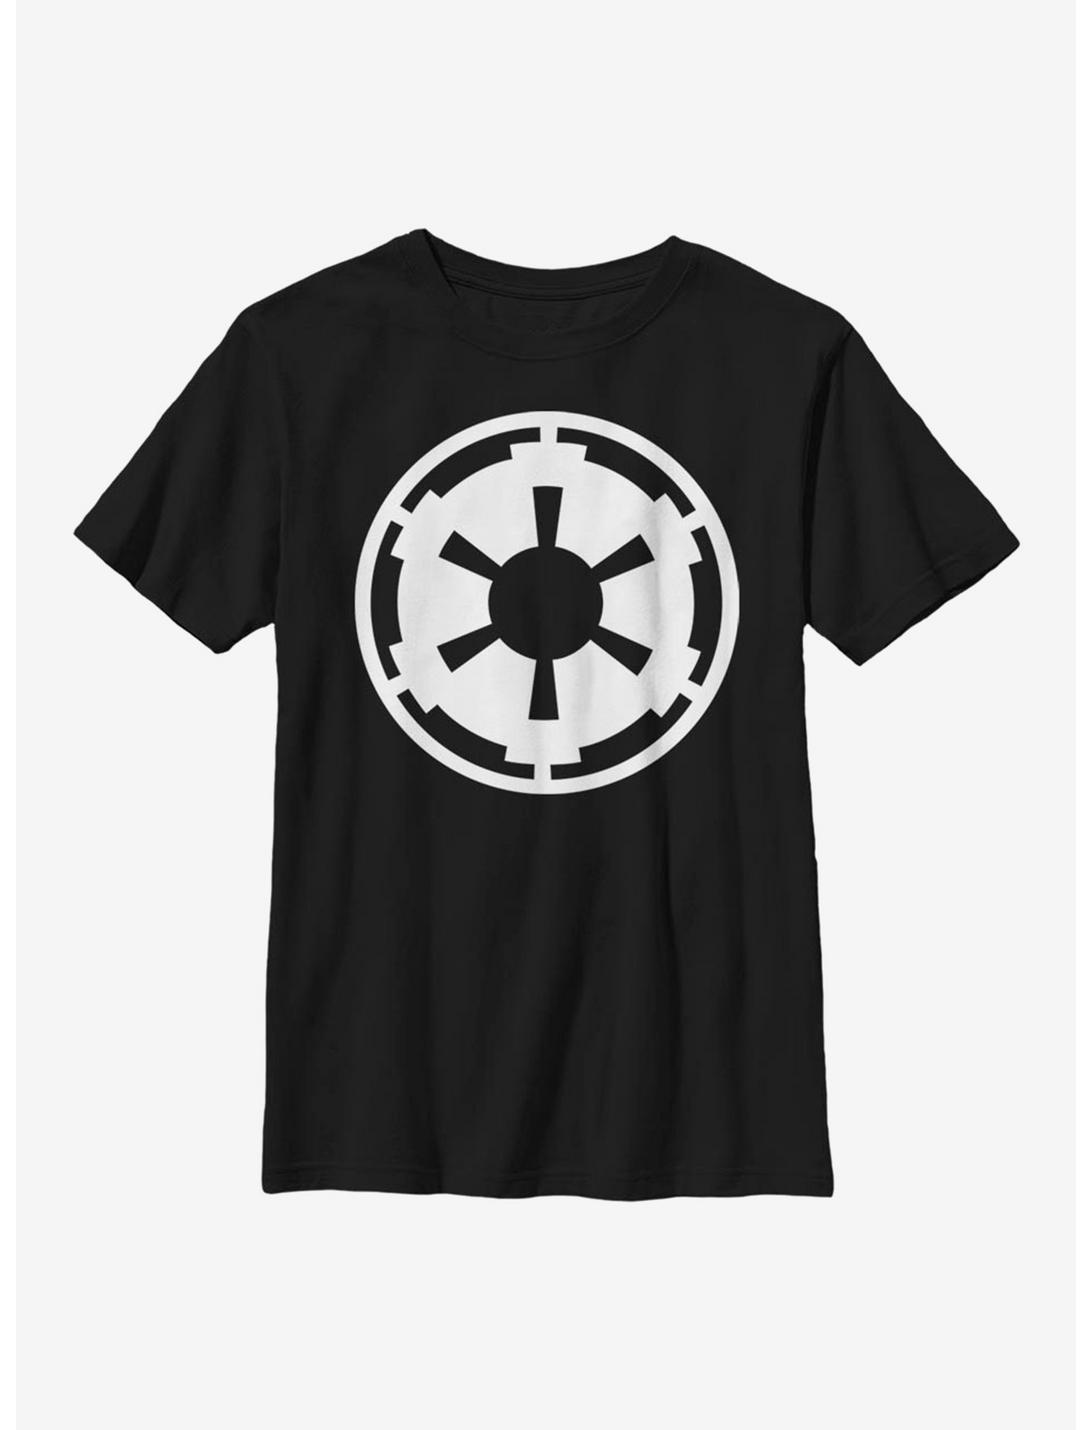 Star Wars Empire Emblem Youth T-Shirt, BLACK, hi-res